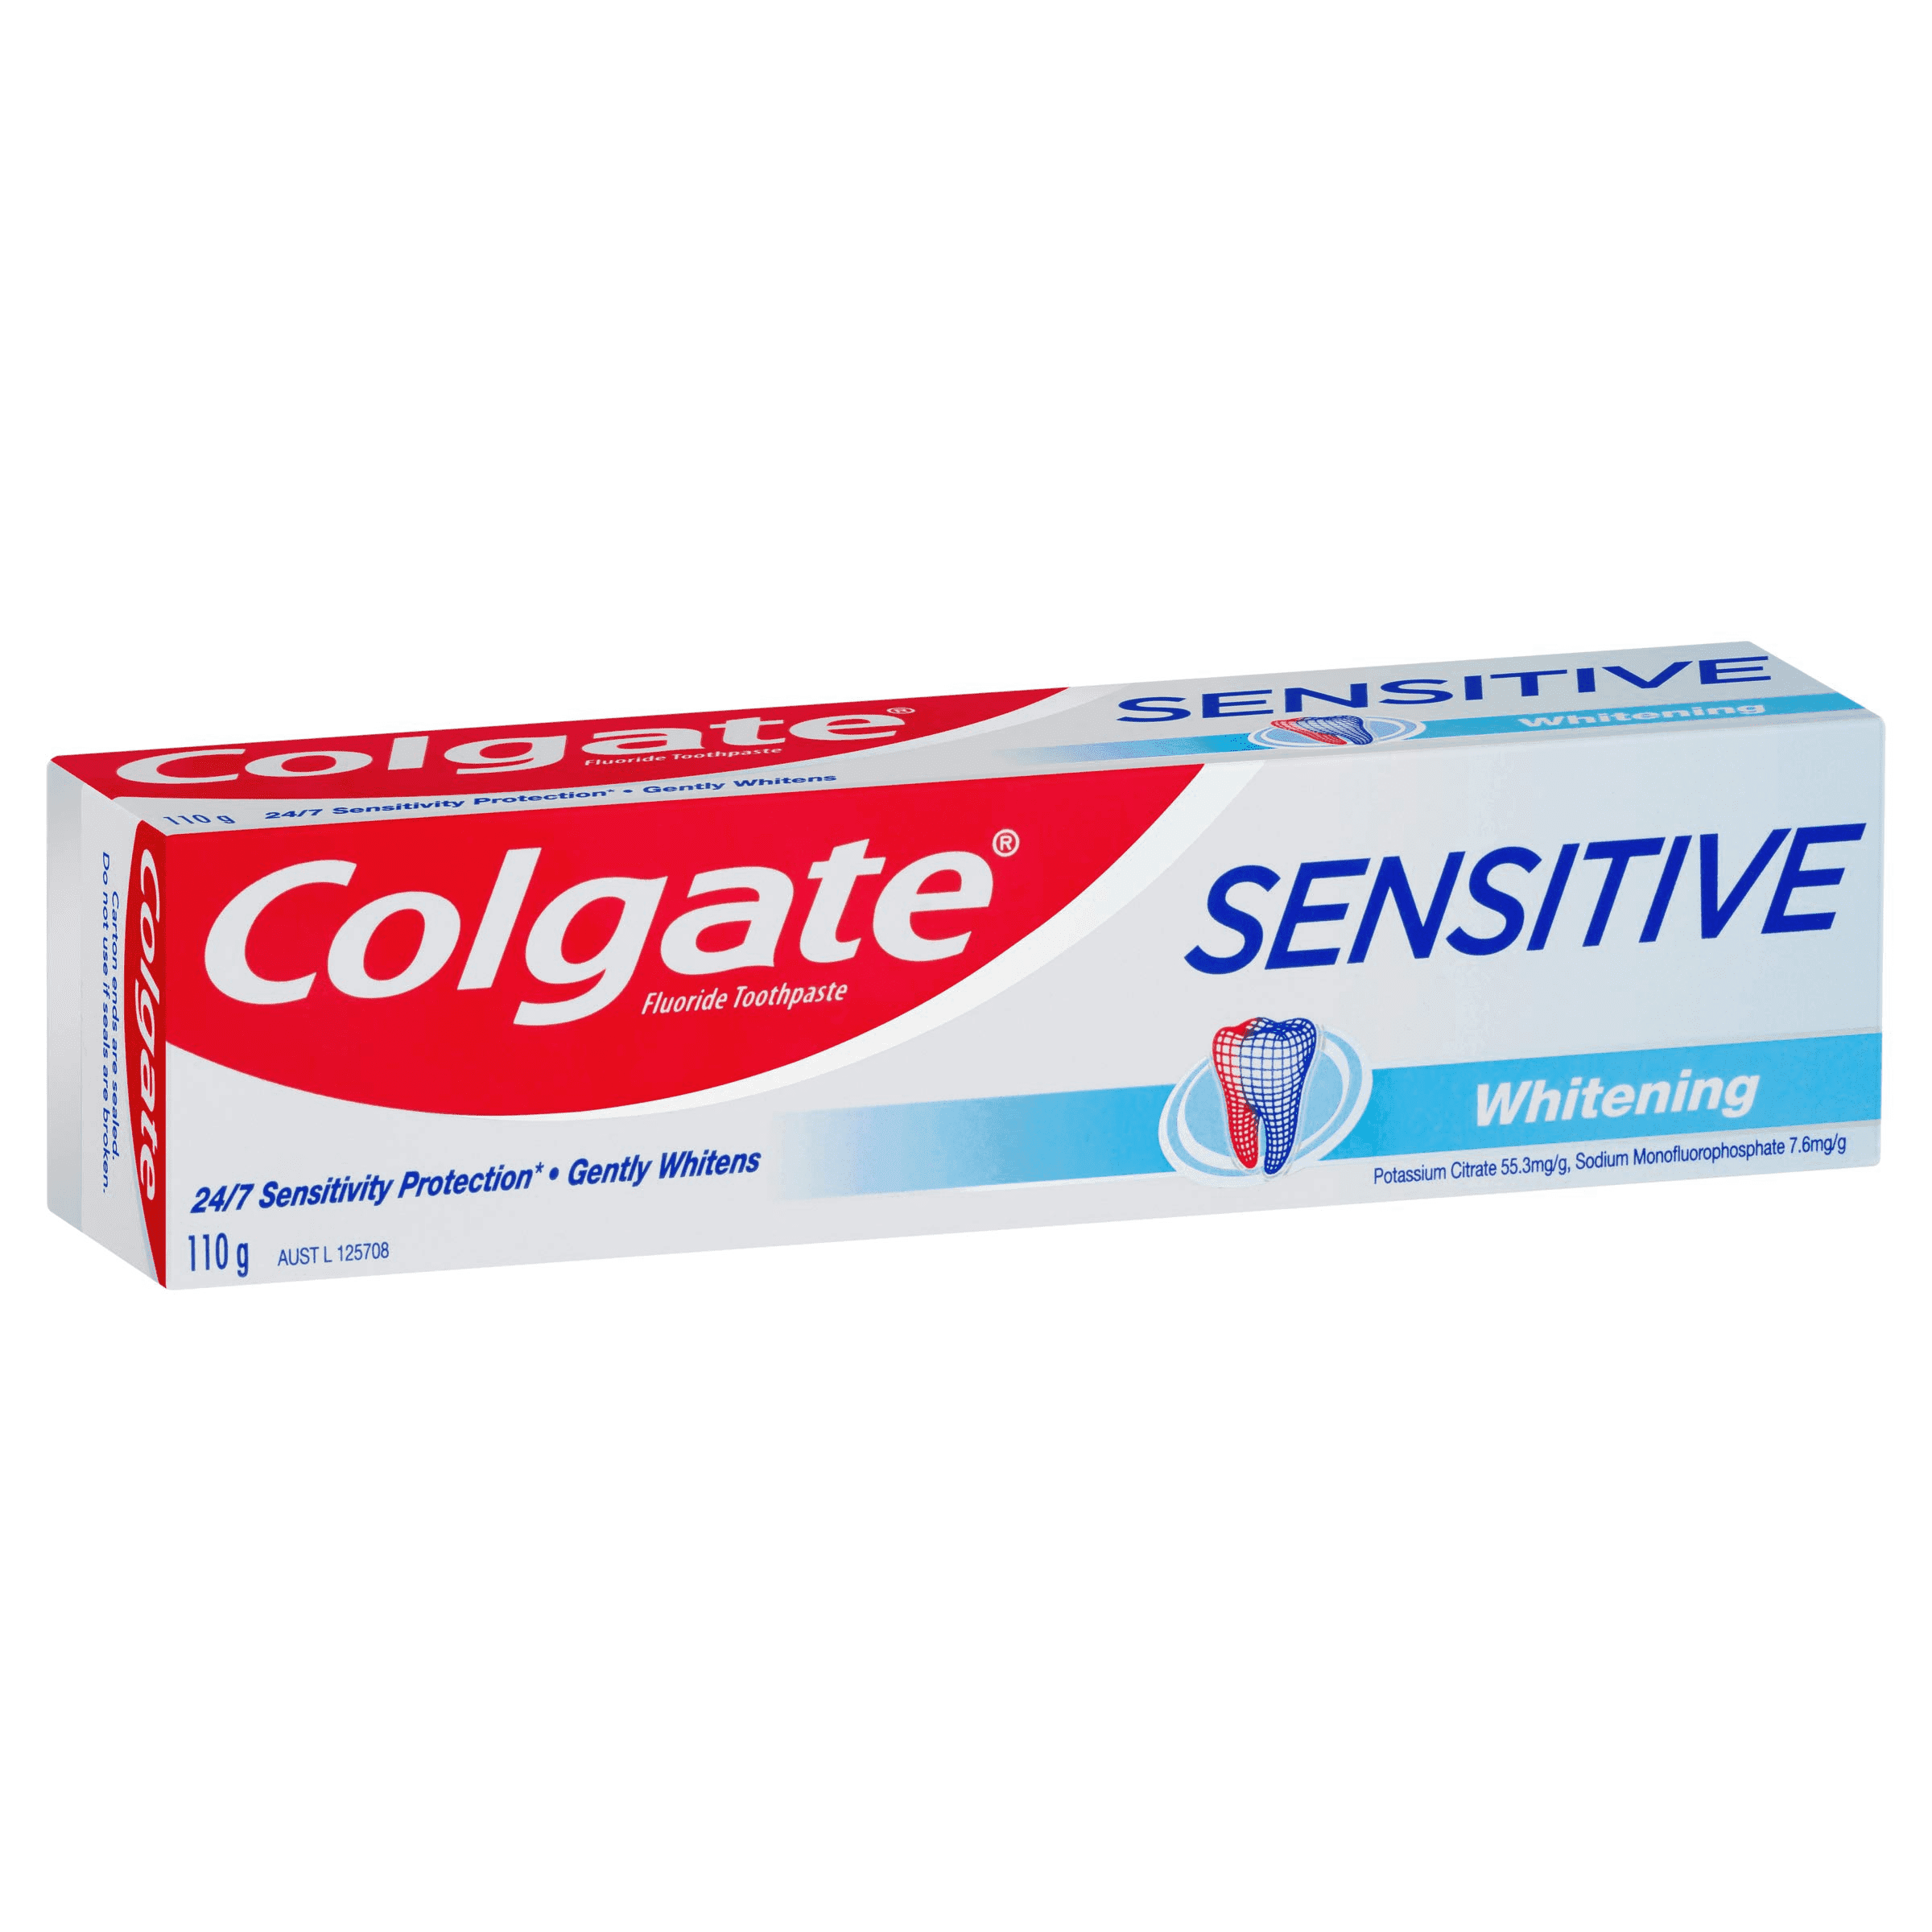 Colgate Sensitive Whitening Toothpaste 110g - www.indiancart.com.au - Mouth Care - Colgate - Colgate